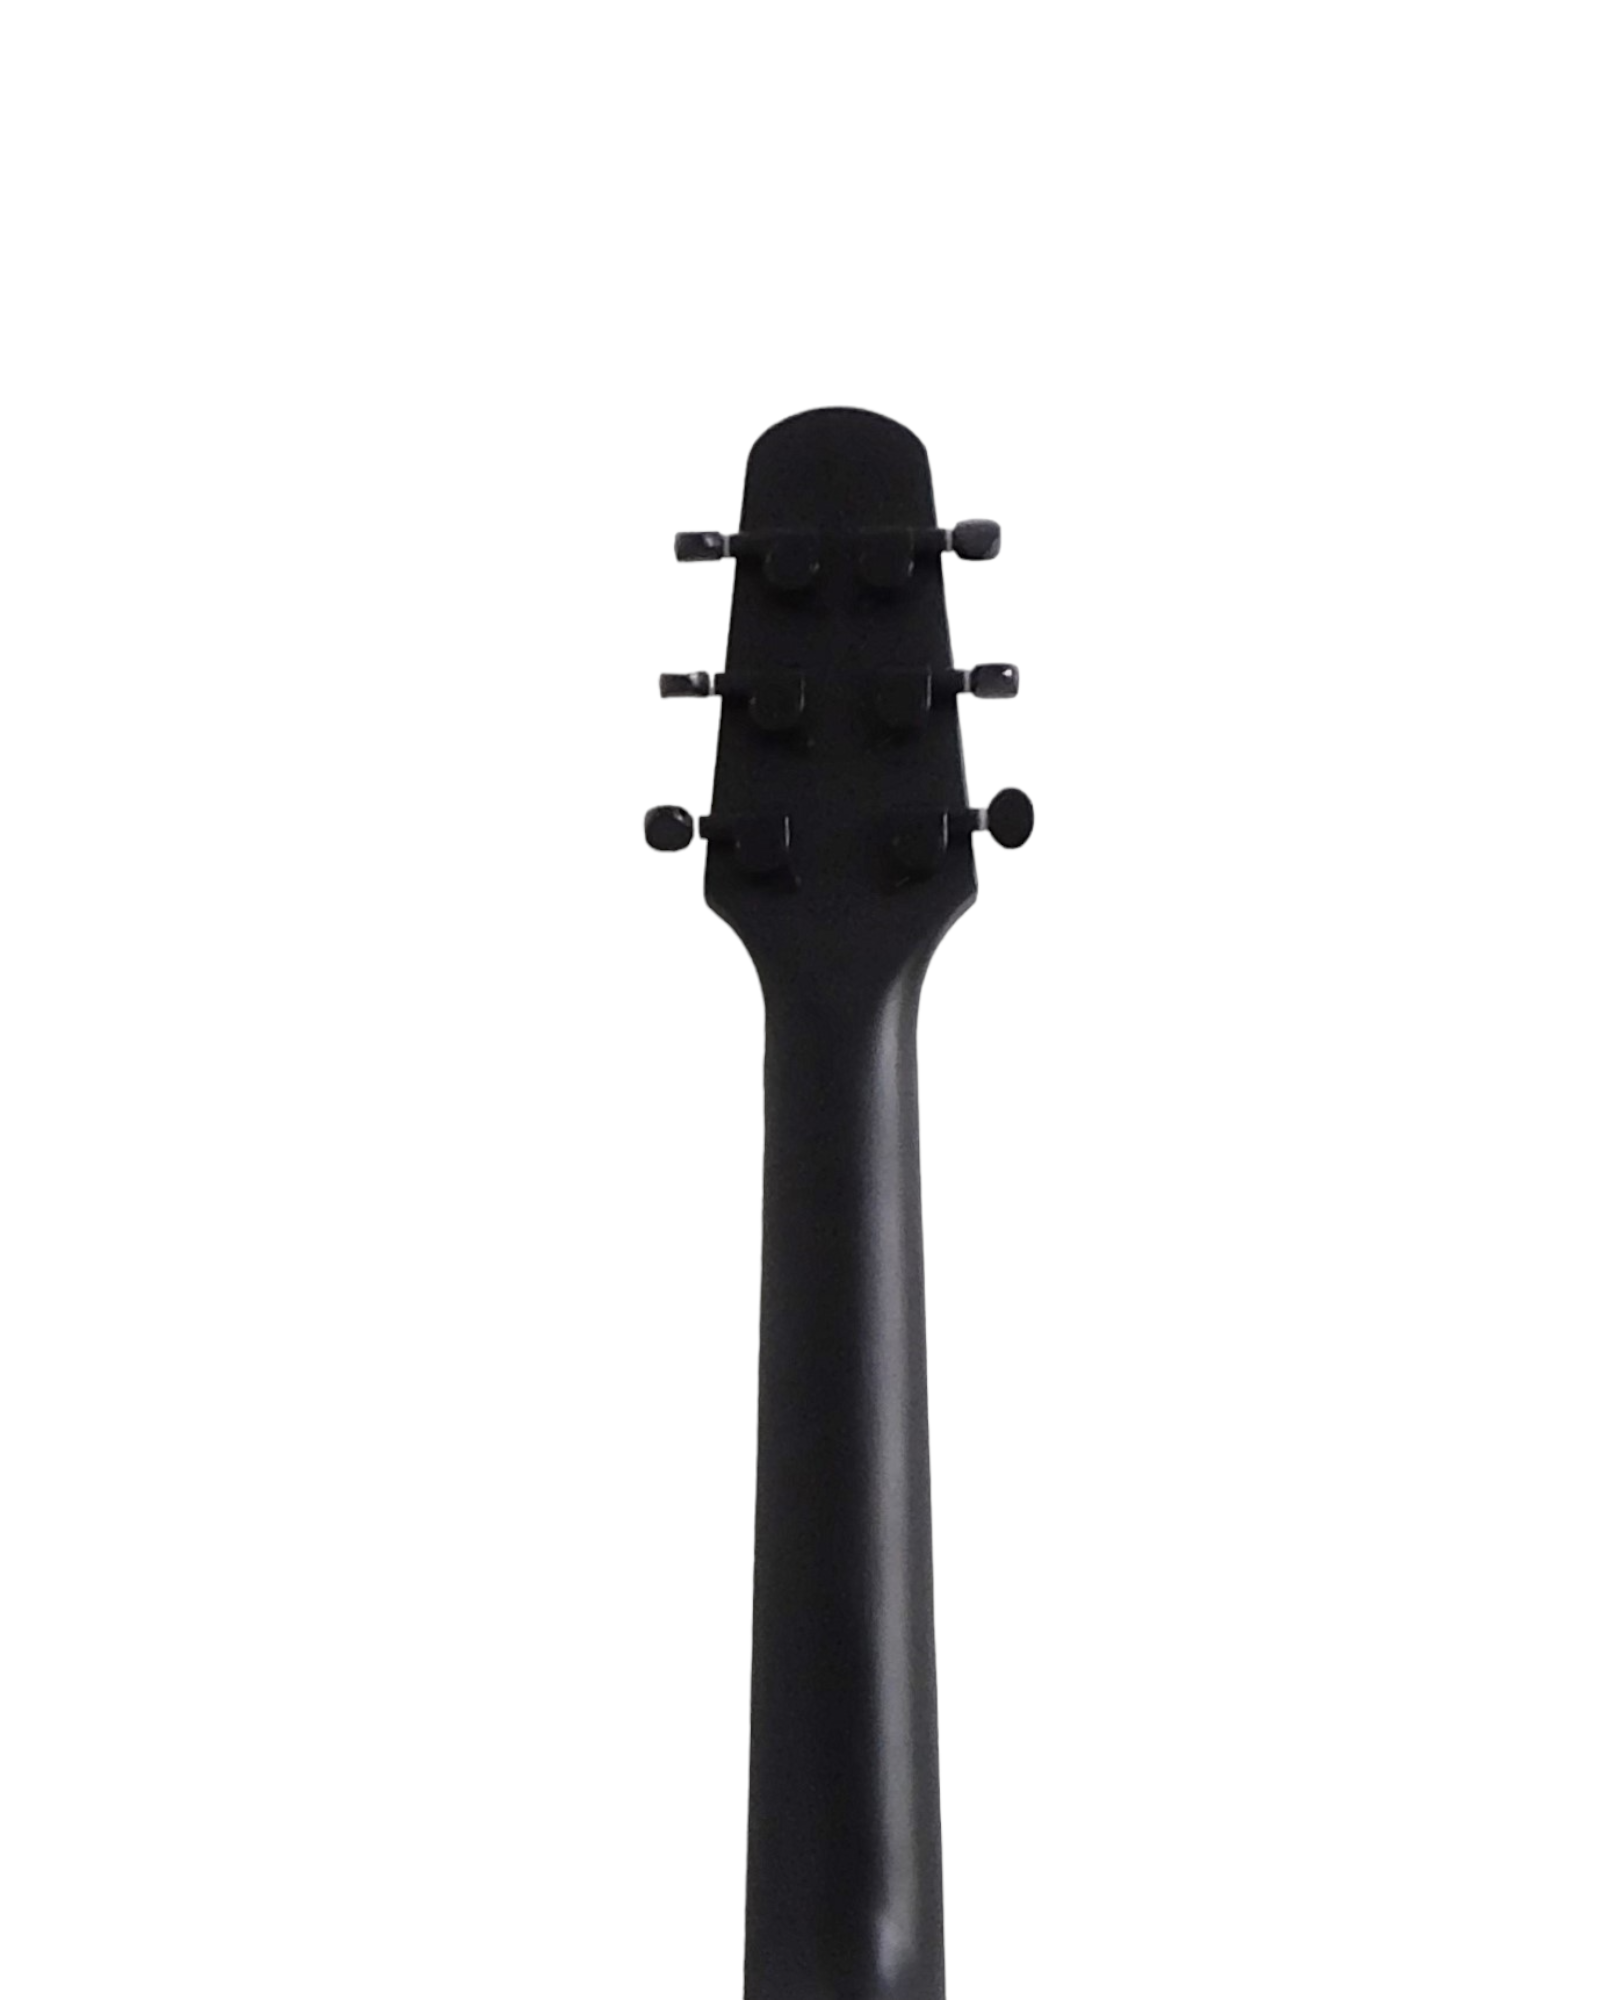 Haze Roundback 38" Traveller Built-In Pickups Acoustic Guitar - Black HSDP836CEQMBK